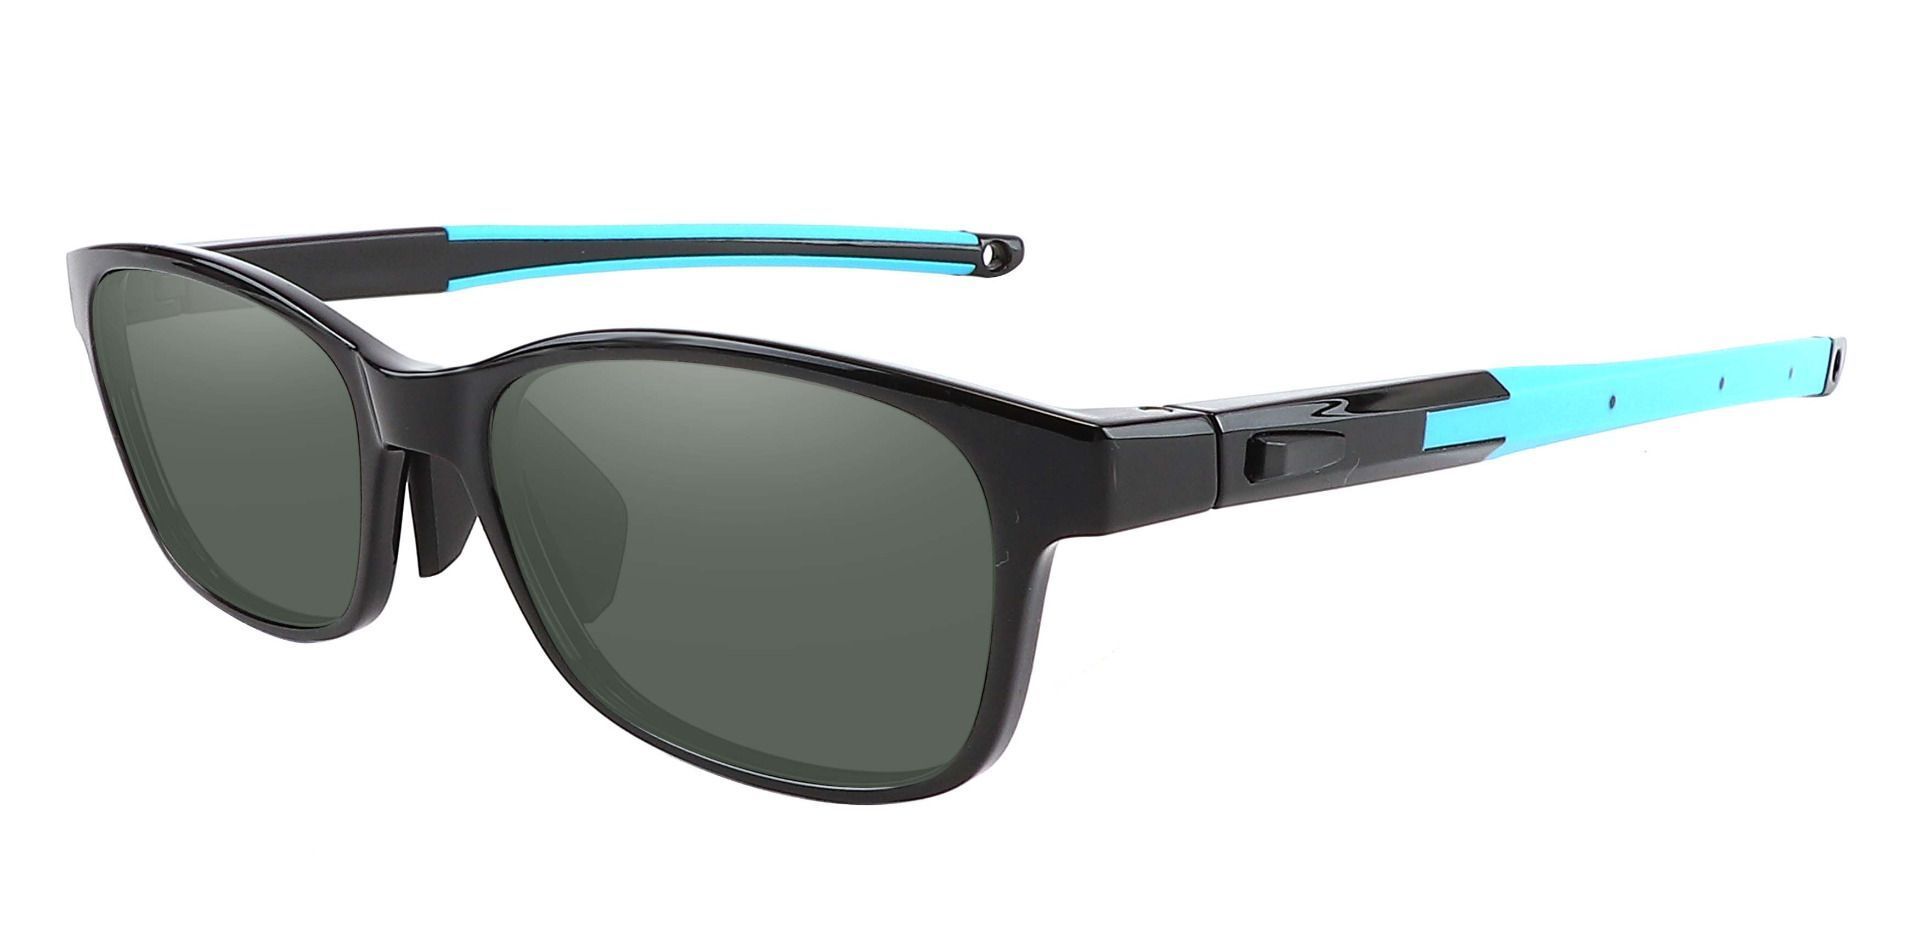 Higgins Rectangle Prescription Sunglasses - Black Frame With Green Lenses